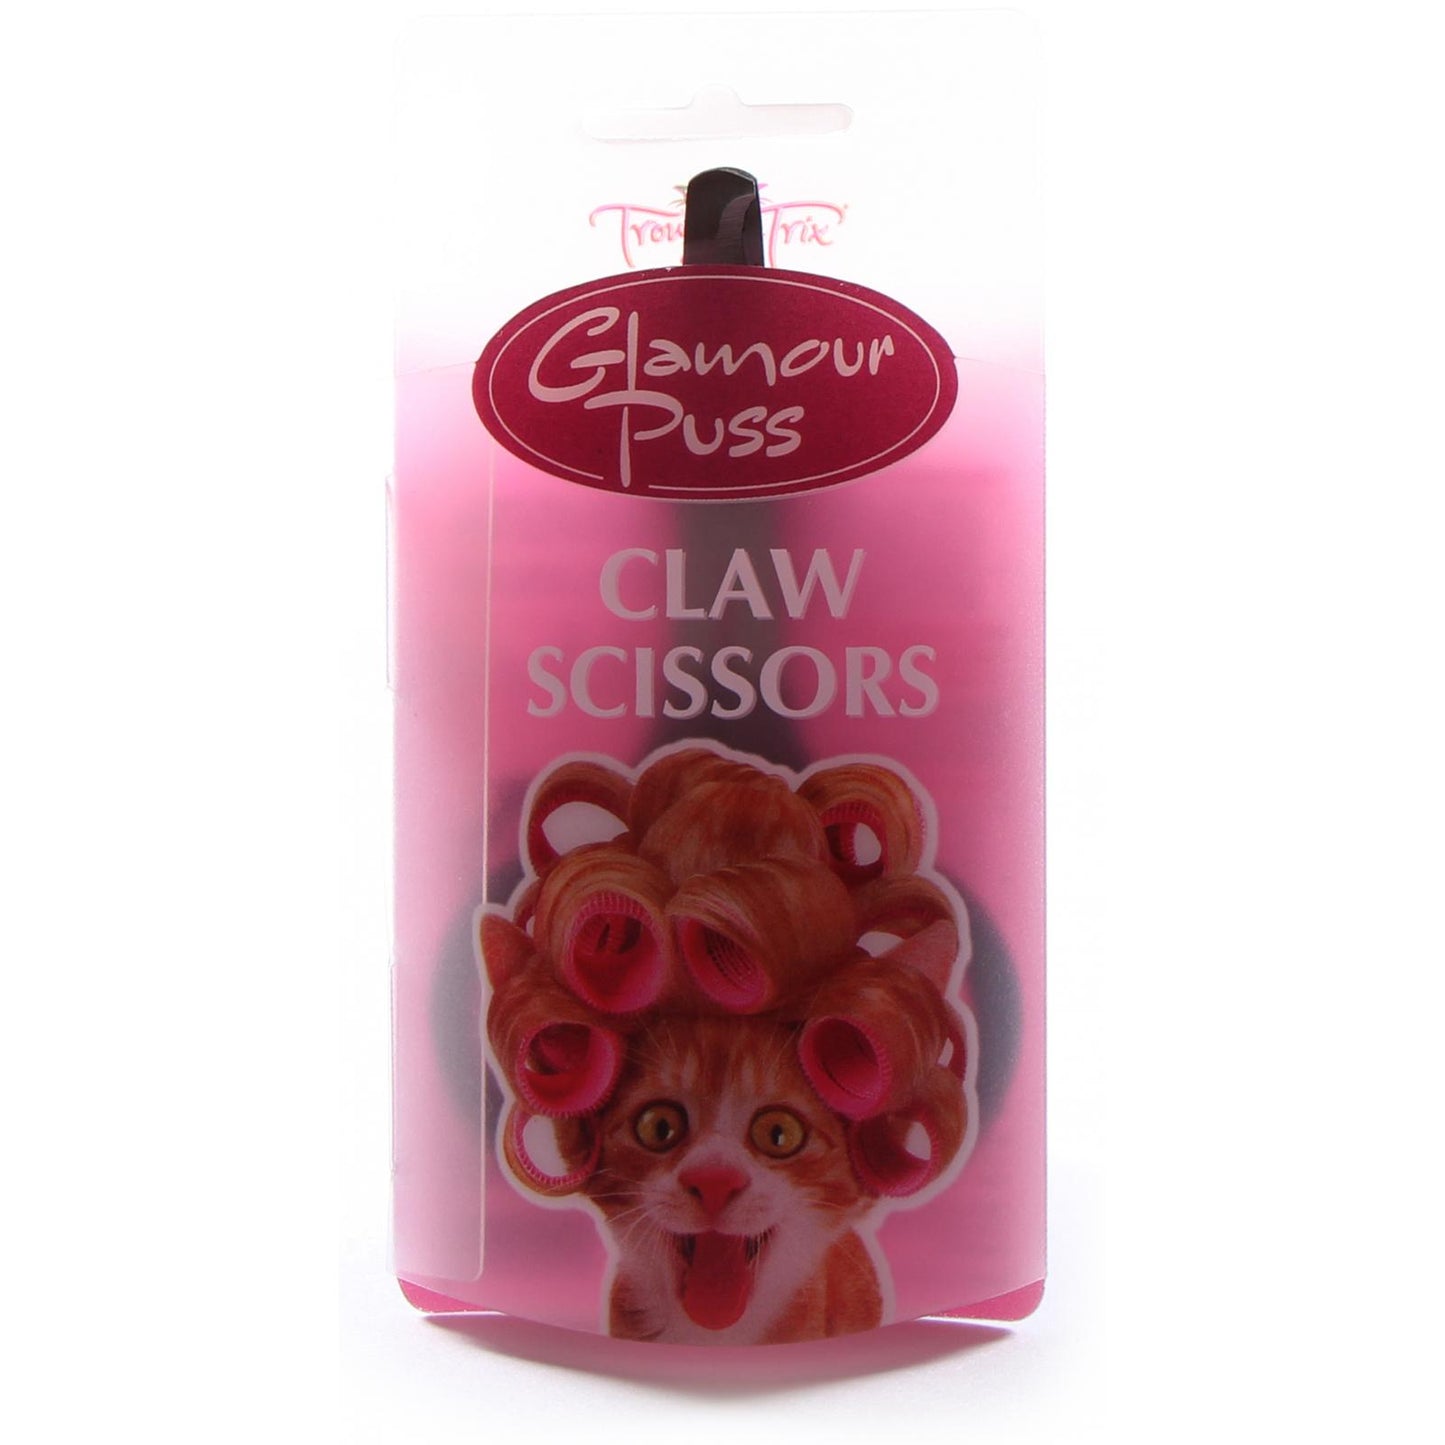 GlamourPuss Cat Claw Scissors